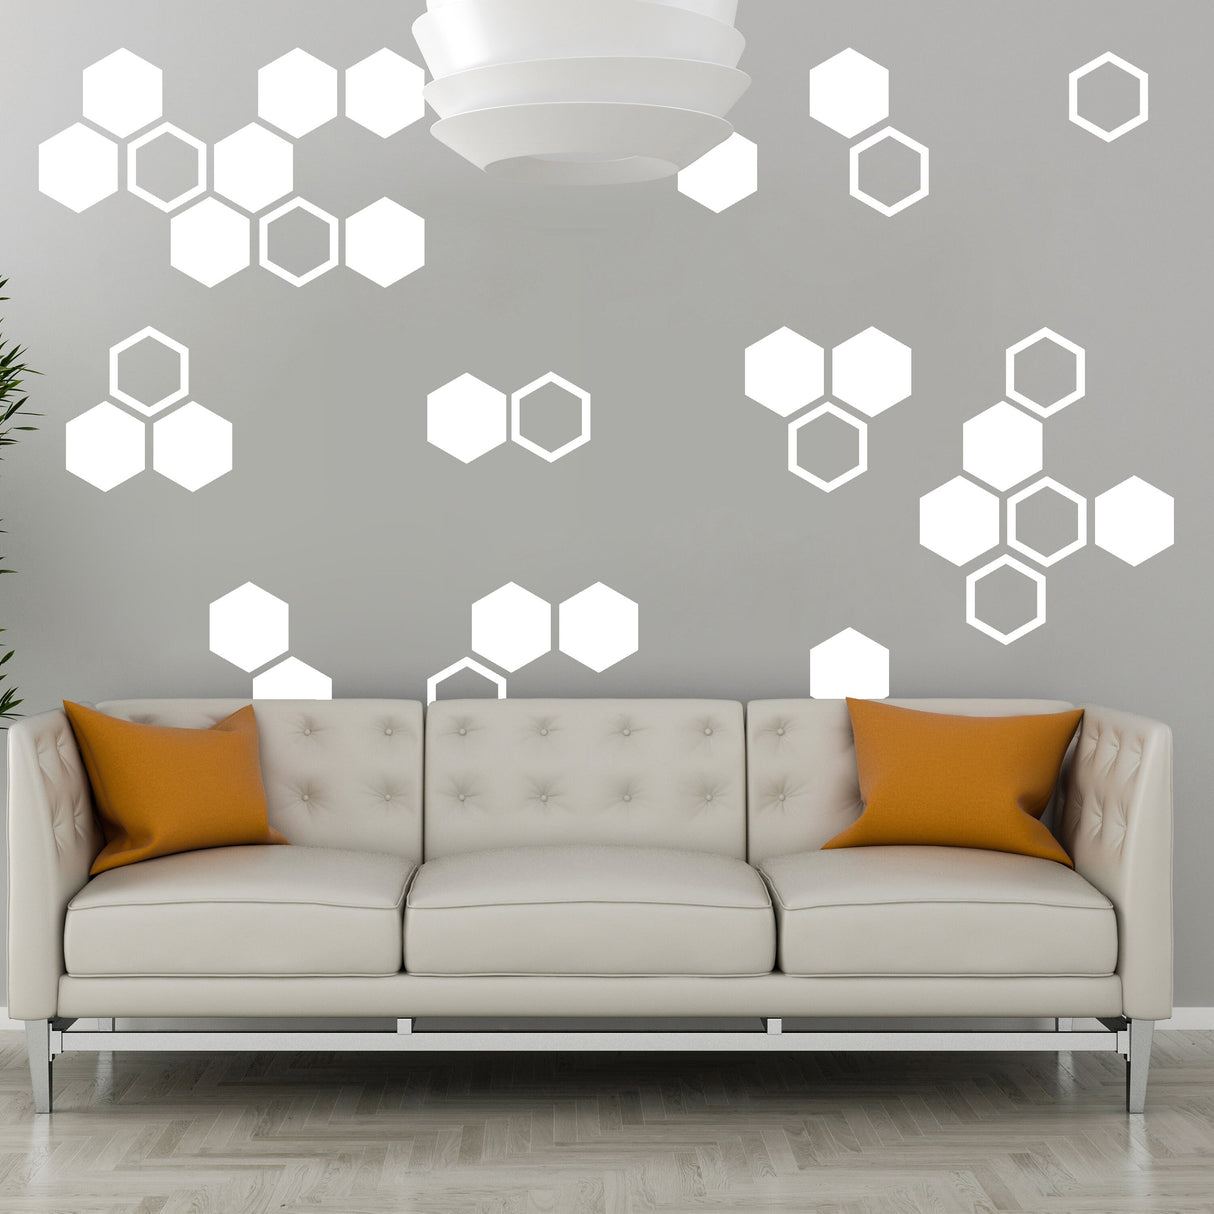 50x Glow In Dark Honeycomb Wall Decals Decor - Nigh Light Geometric Hexagon Stickers